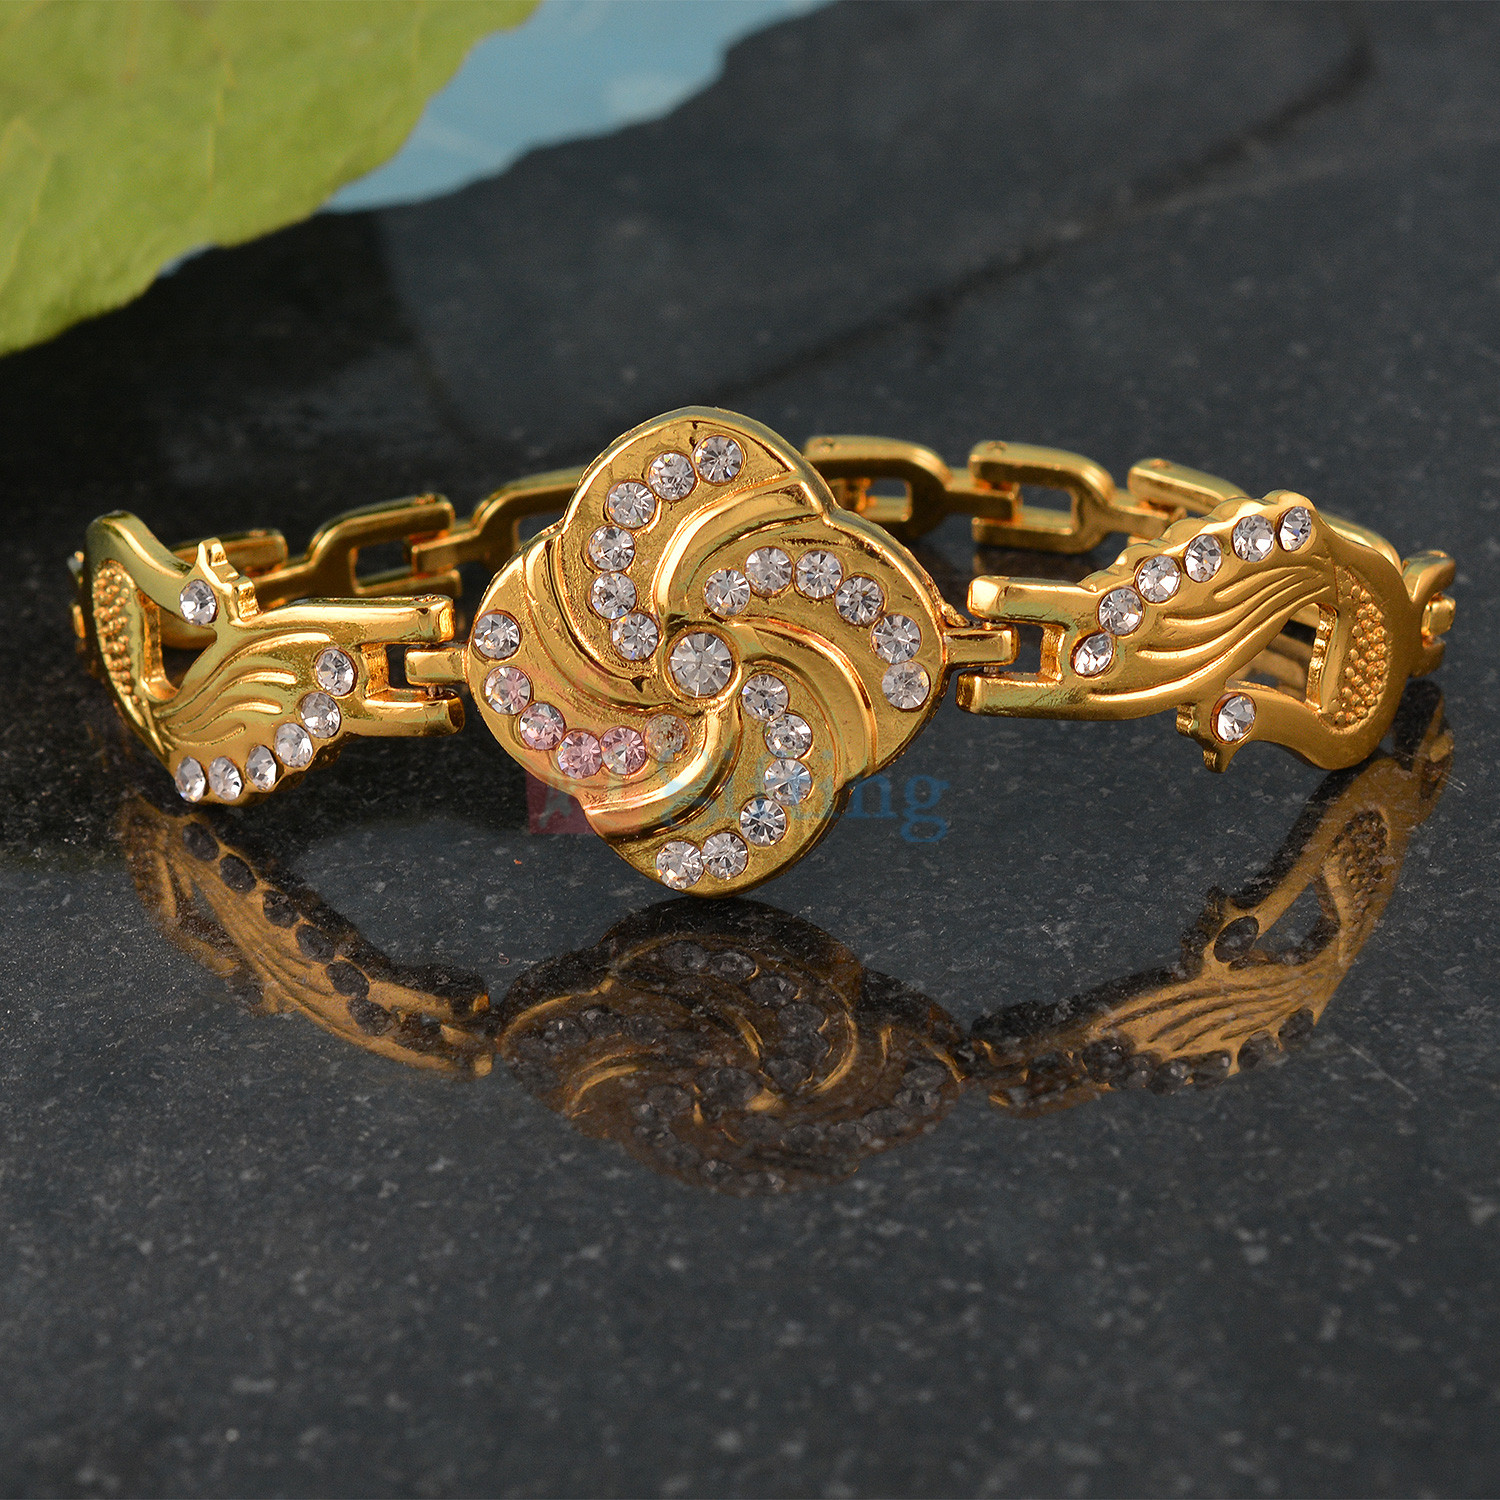 Designer Golden Peacock Bracelet with Diamonds